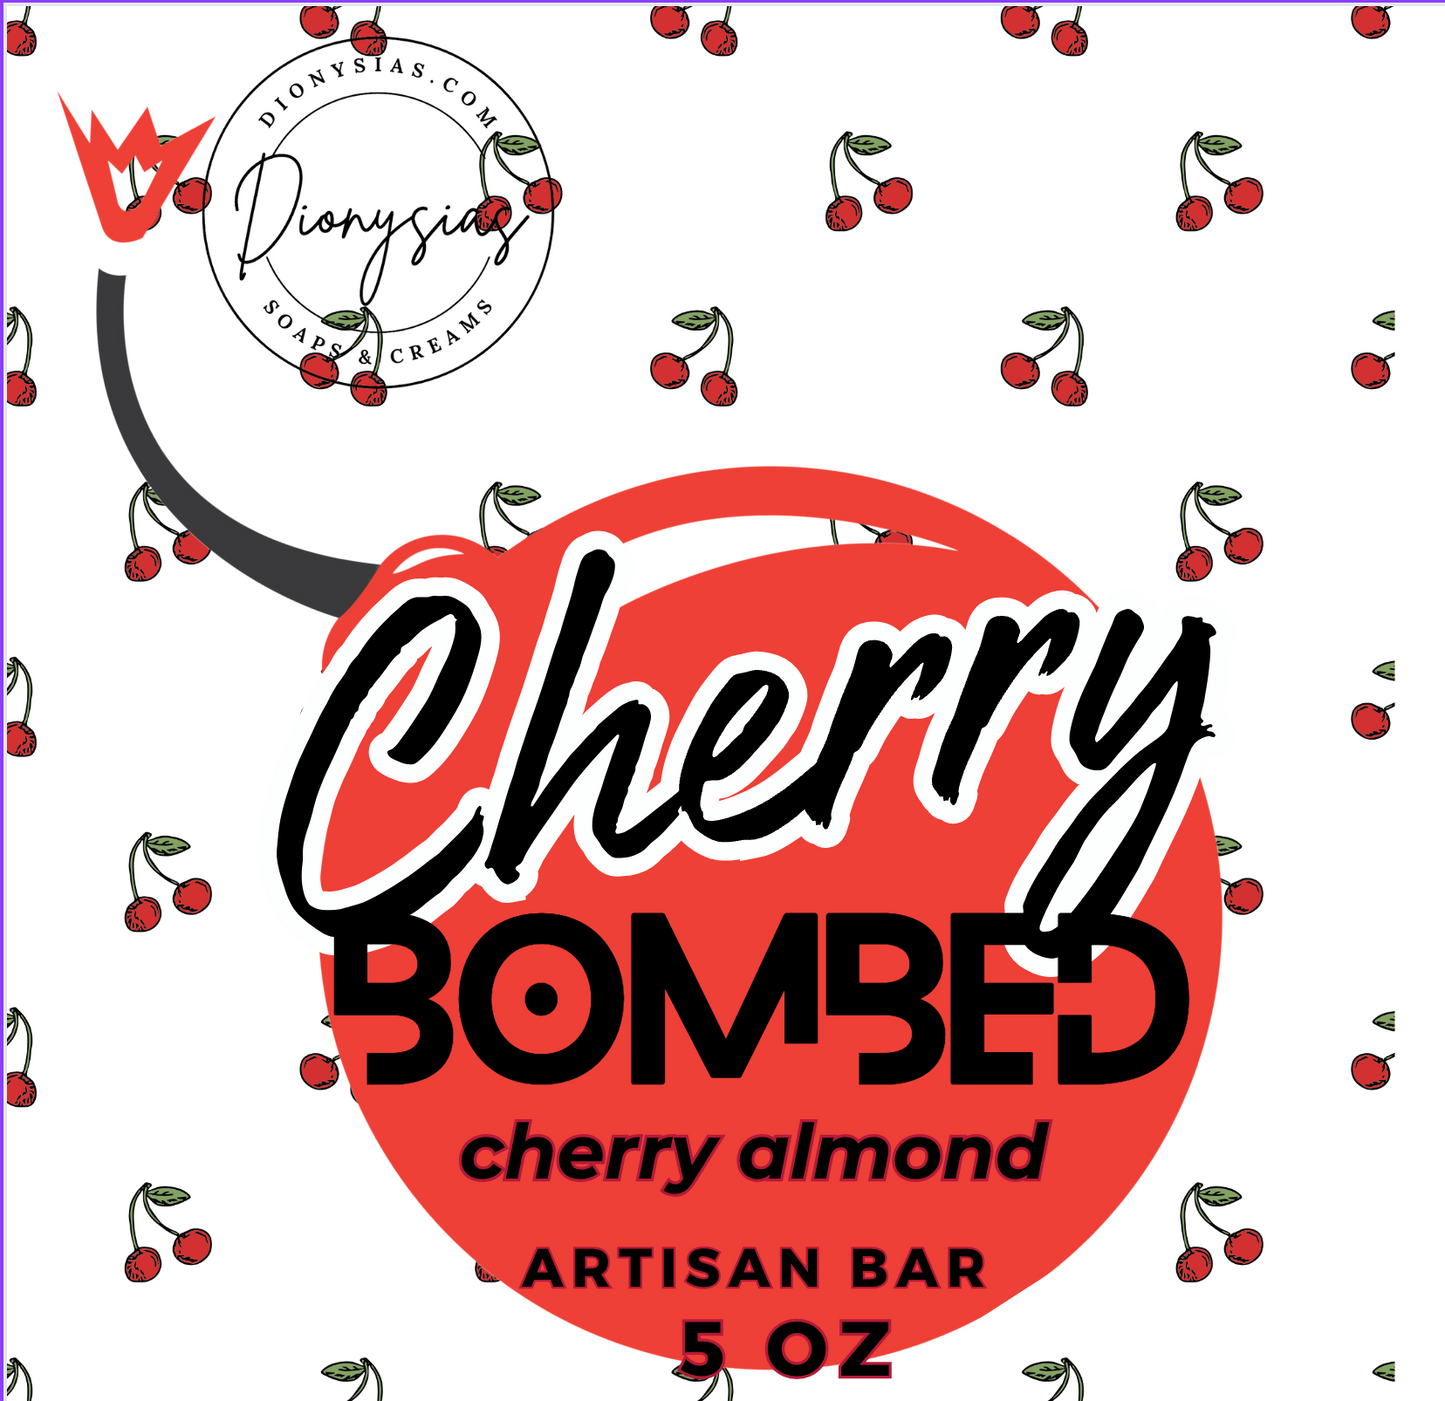 CHERRY BOMBED (artisan bar)